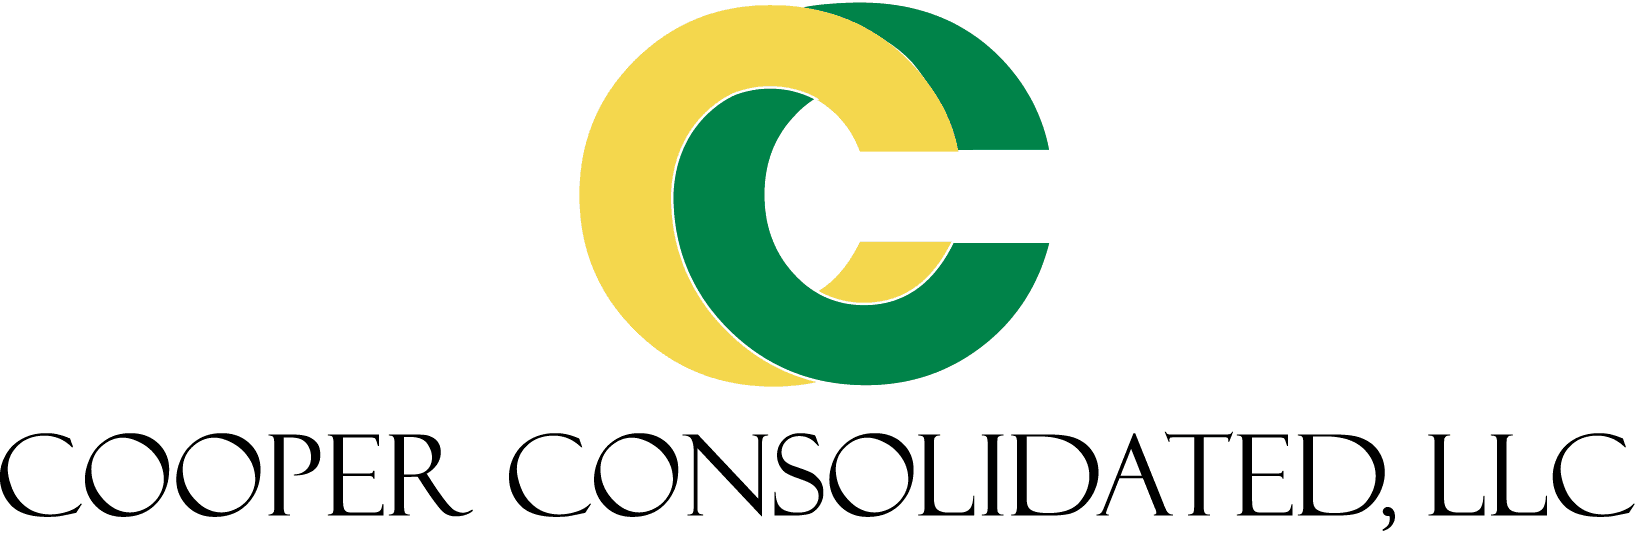 Cooper Consolidated, LLC